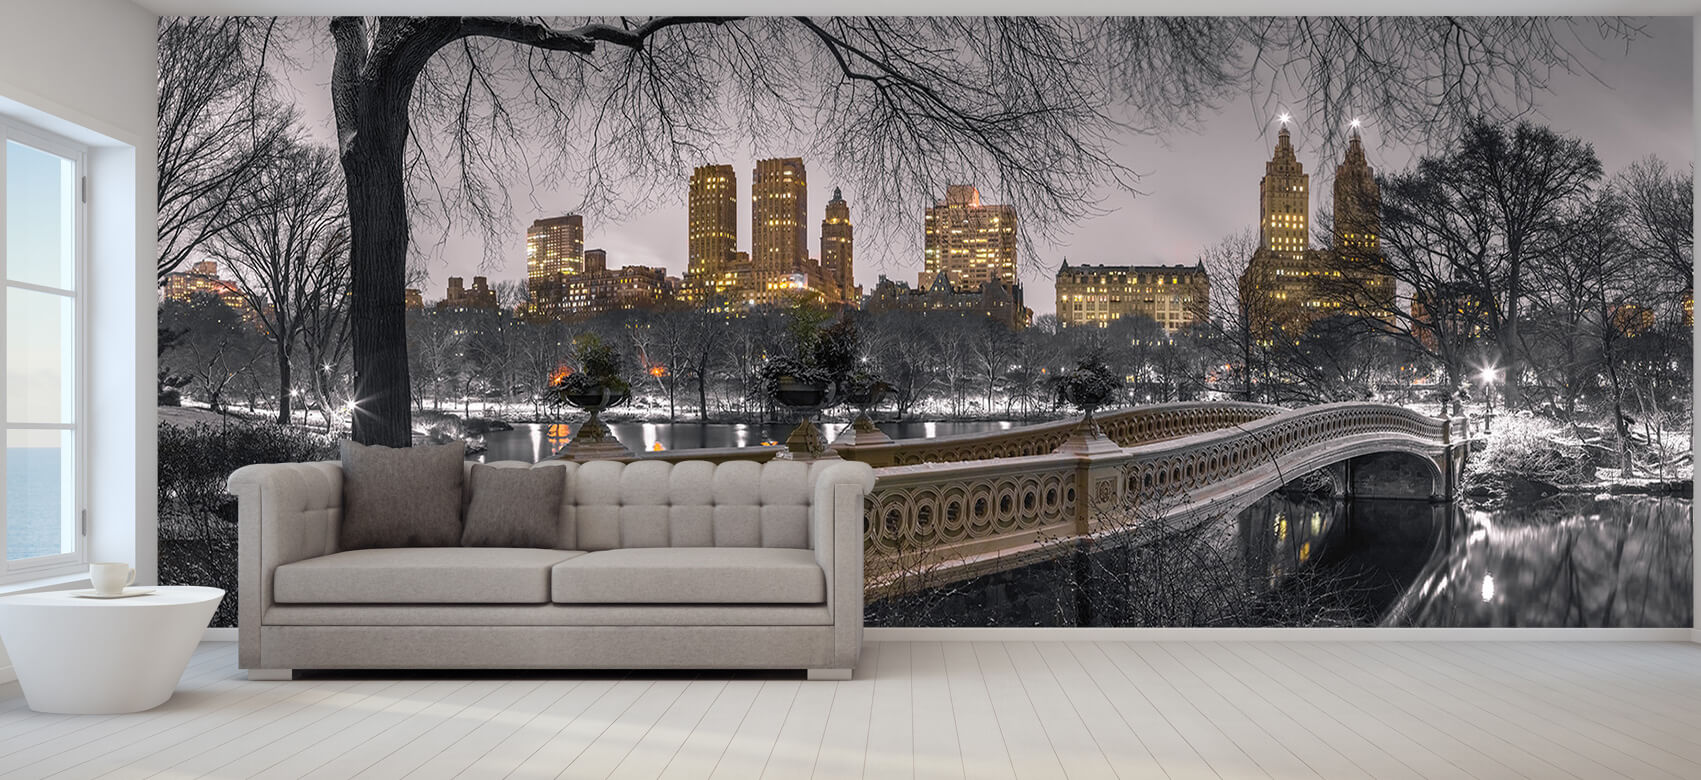  Papel pintado con Central Park y Manhattan - Salón 5